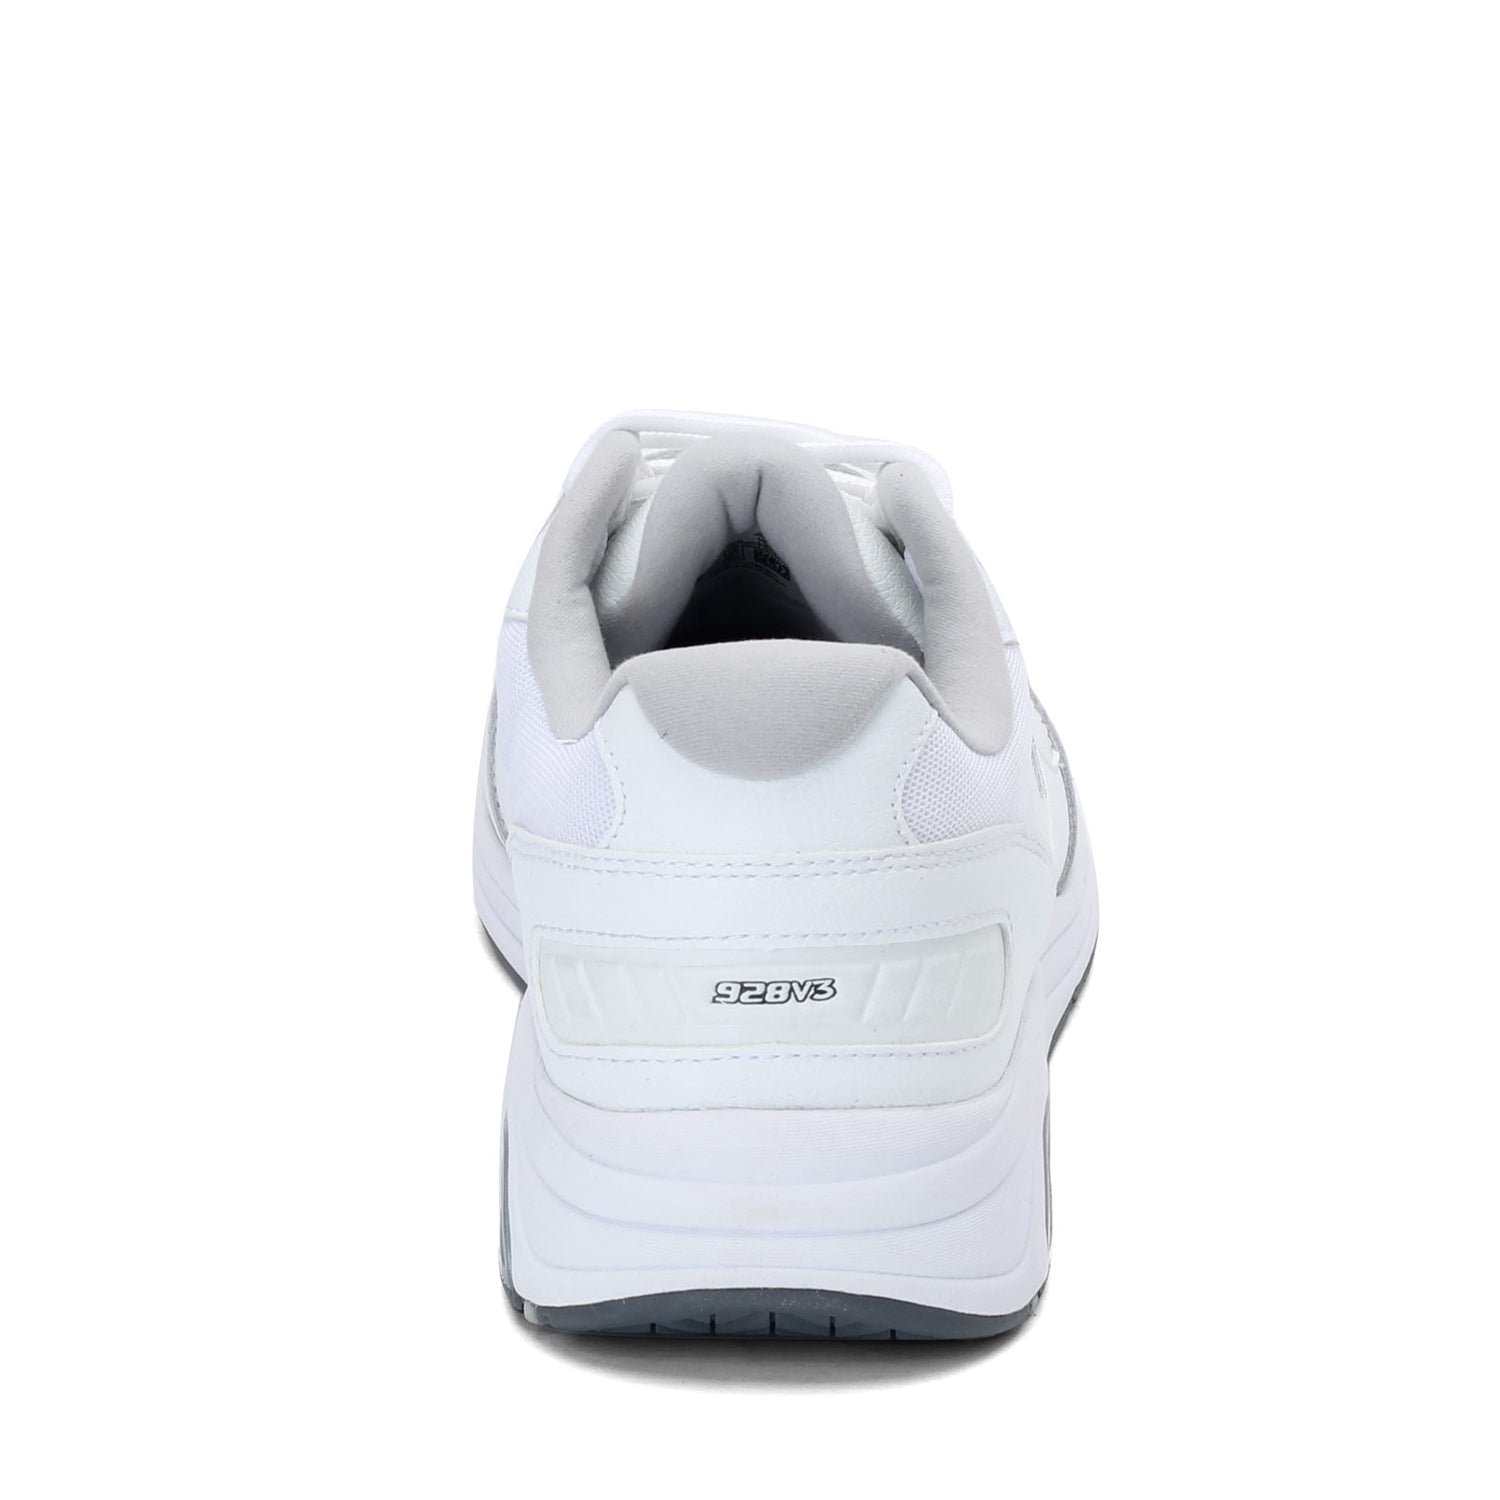 Peltz Shoes  Men's New Balance 928v3 Walking Shoe WHITE MW928WT3